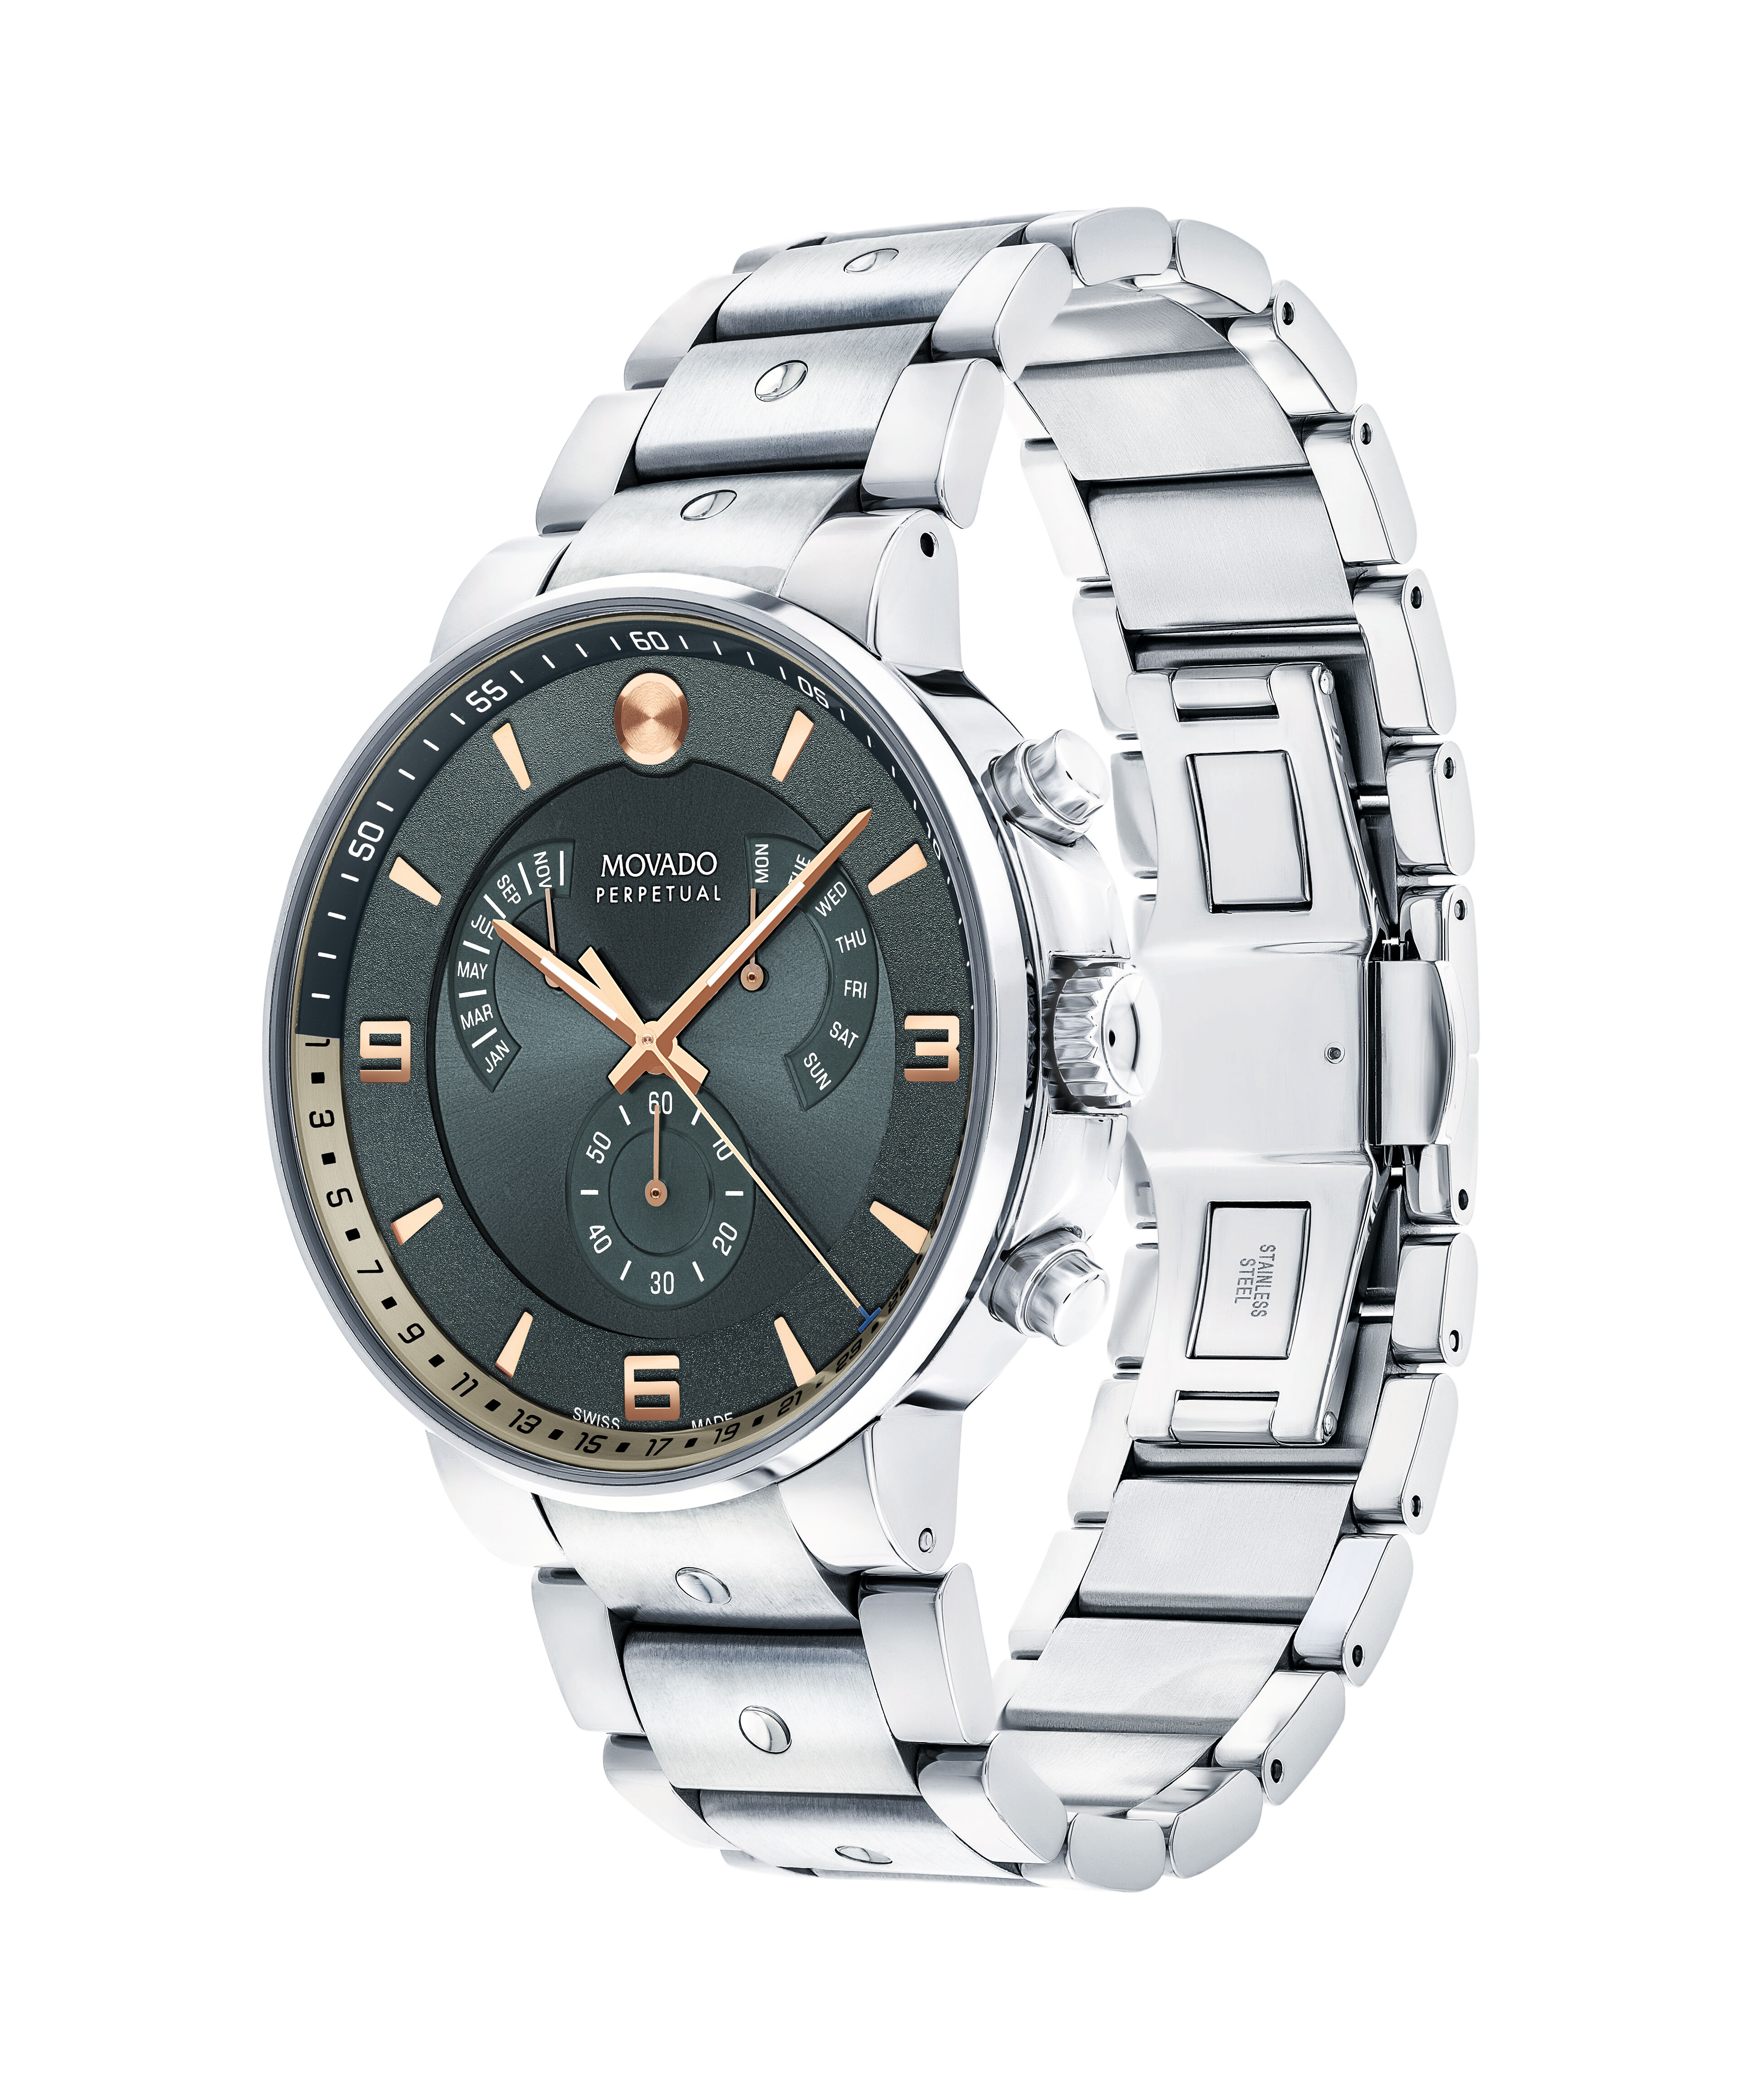 Rolex Mens Watch Oyster Perpetual Datejust Replica